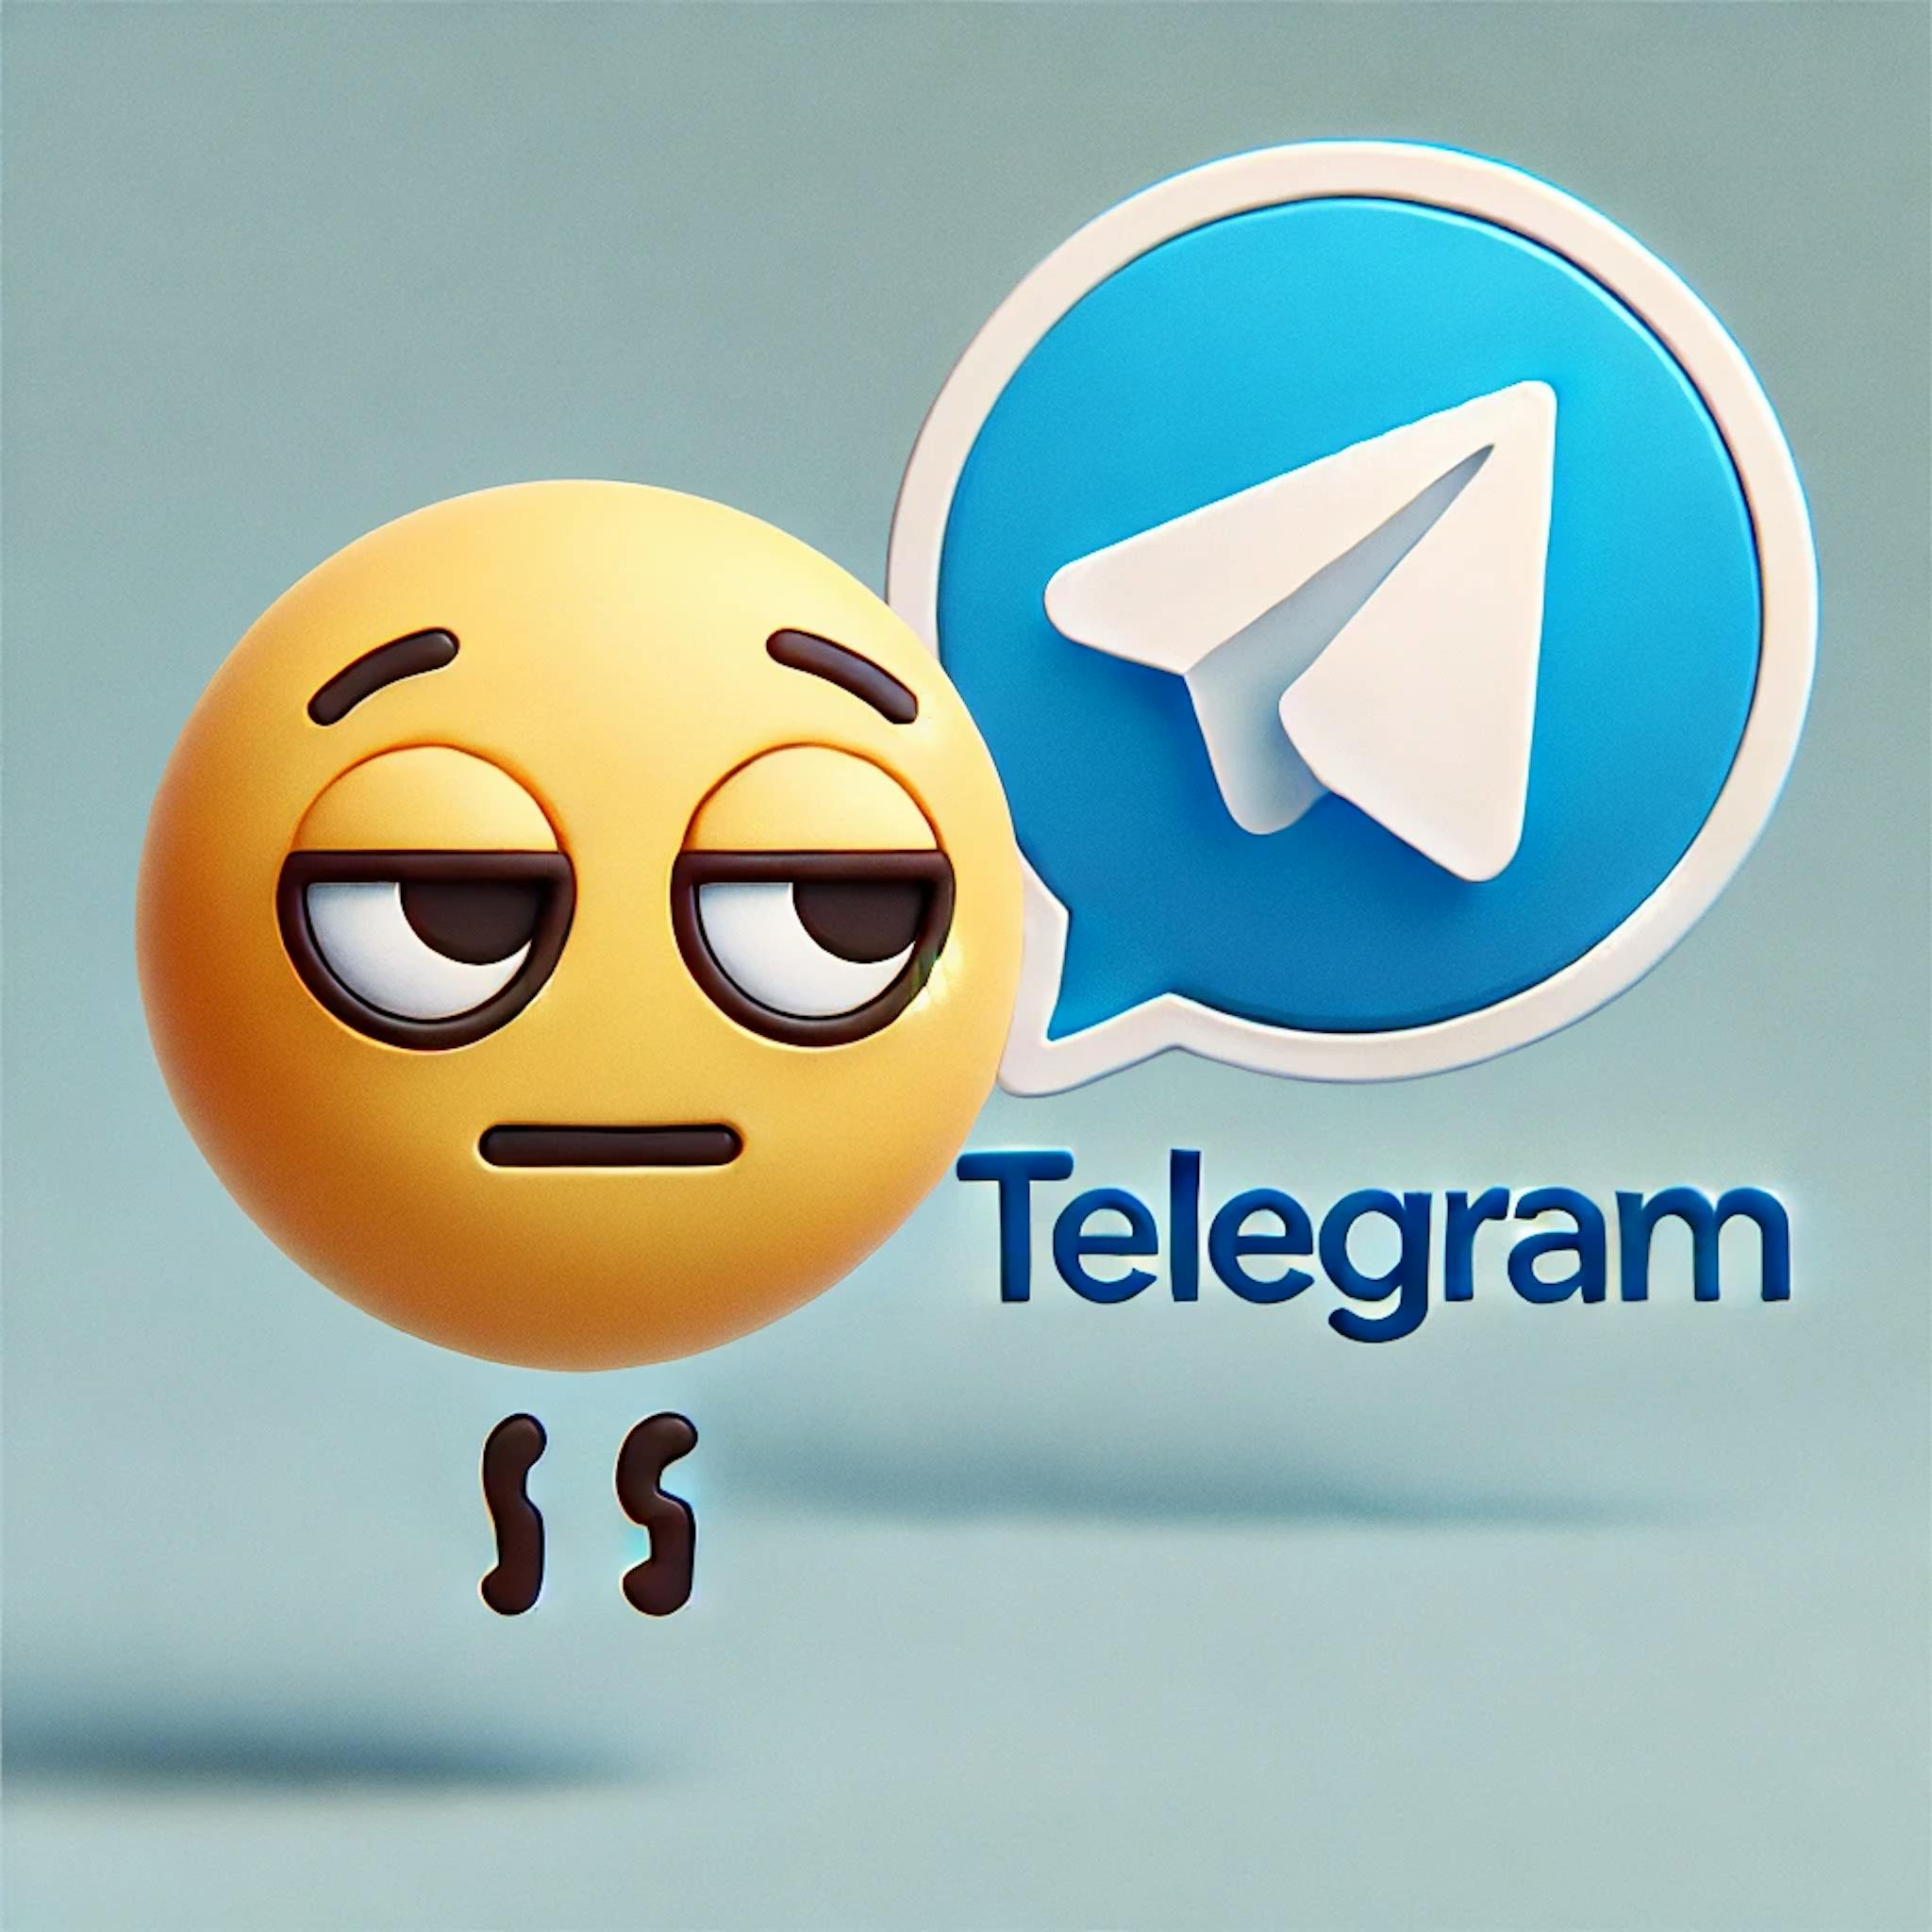 featured image - Telegram Games Have Boring Marketing Strategies 